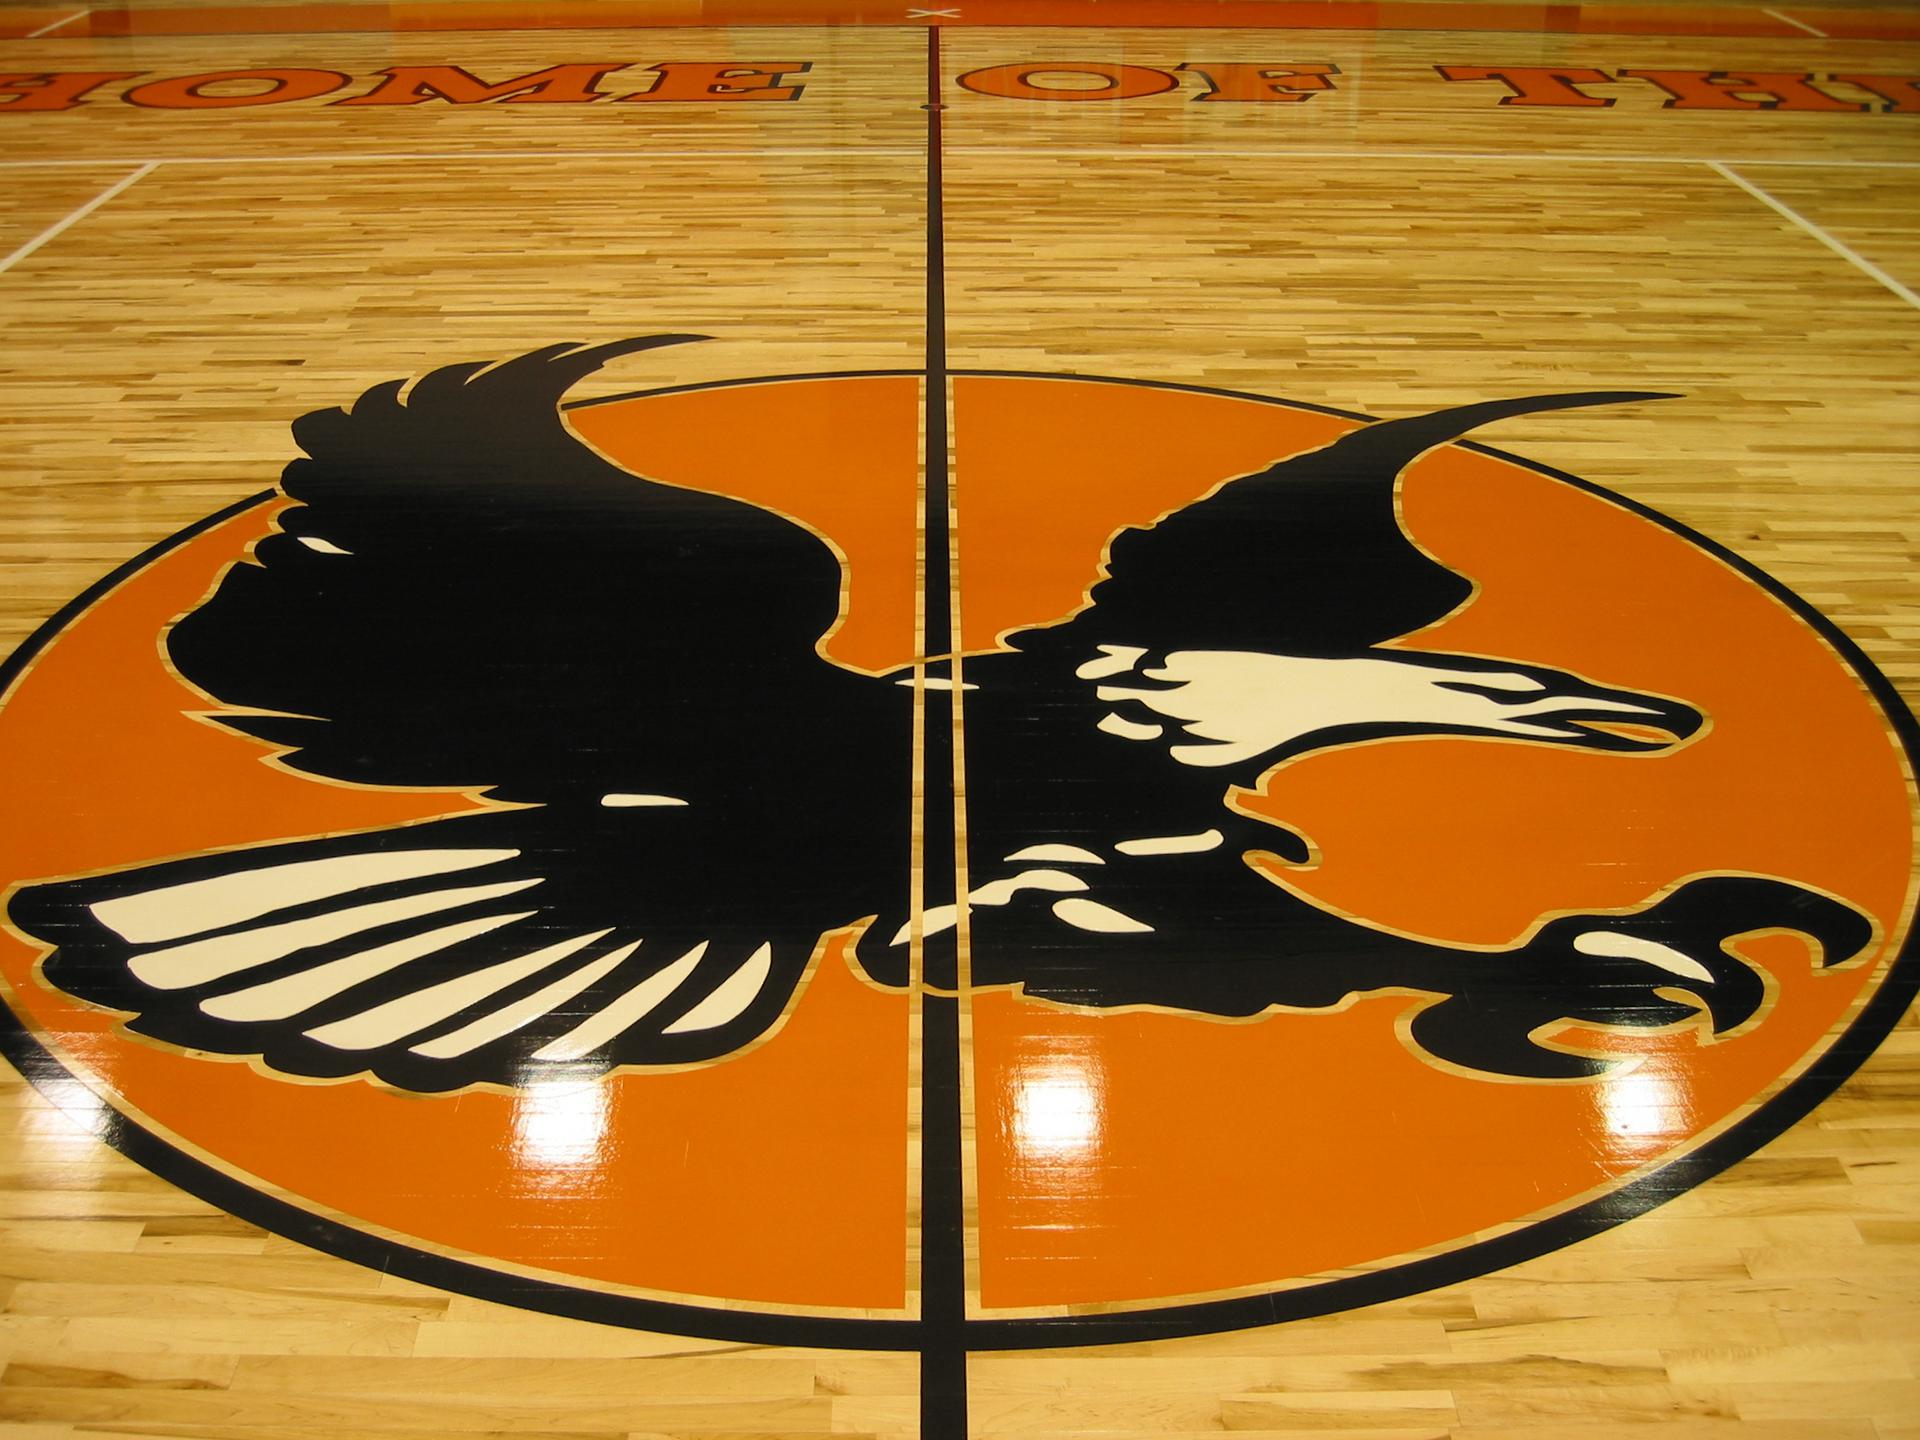 The Avalon Eagles emblem on the gymnasium court.